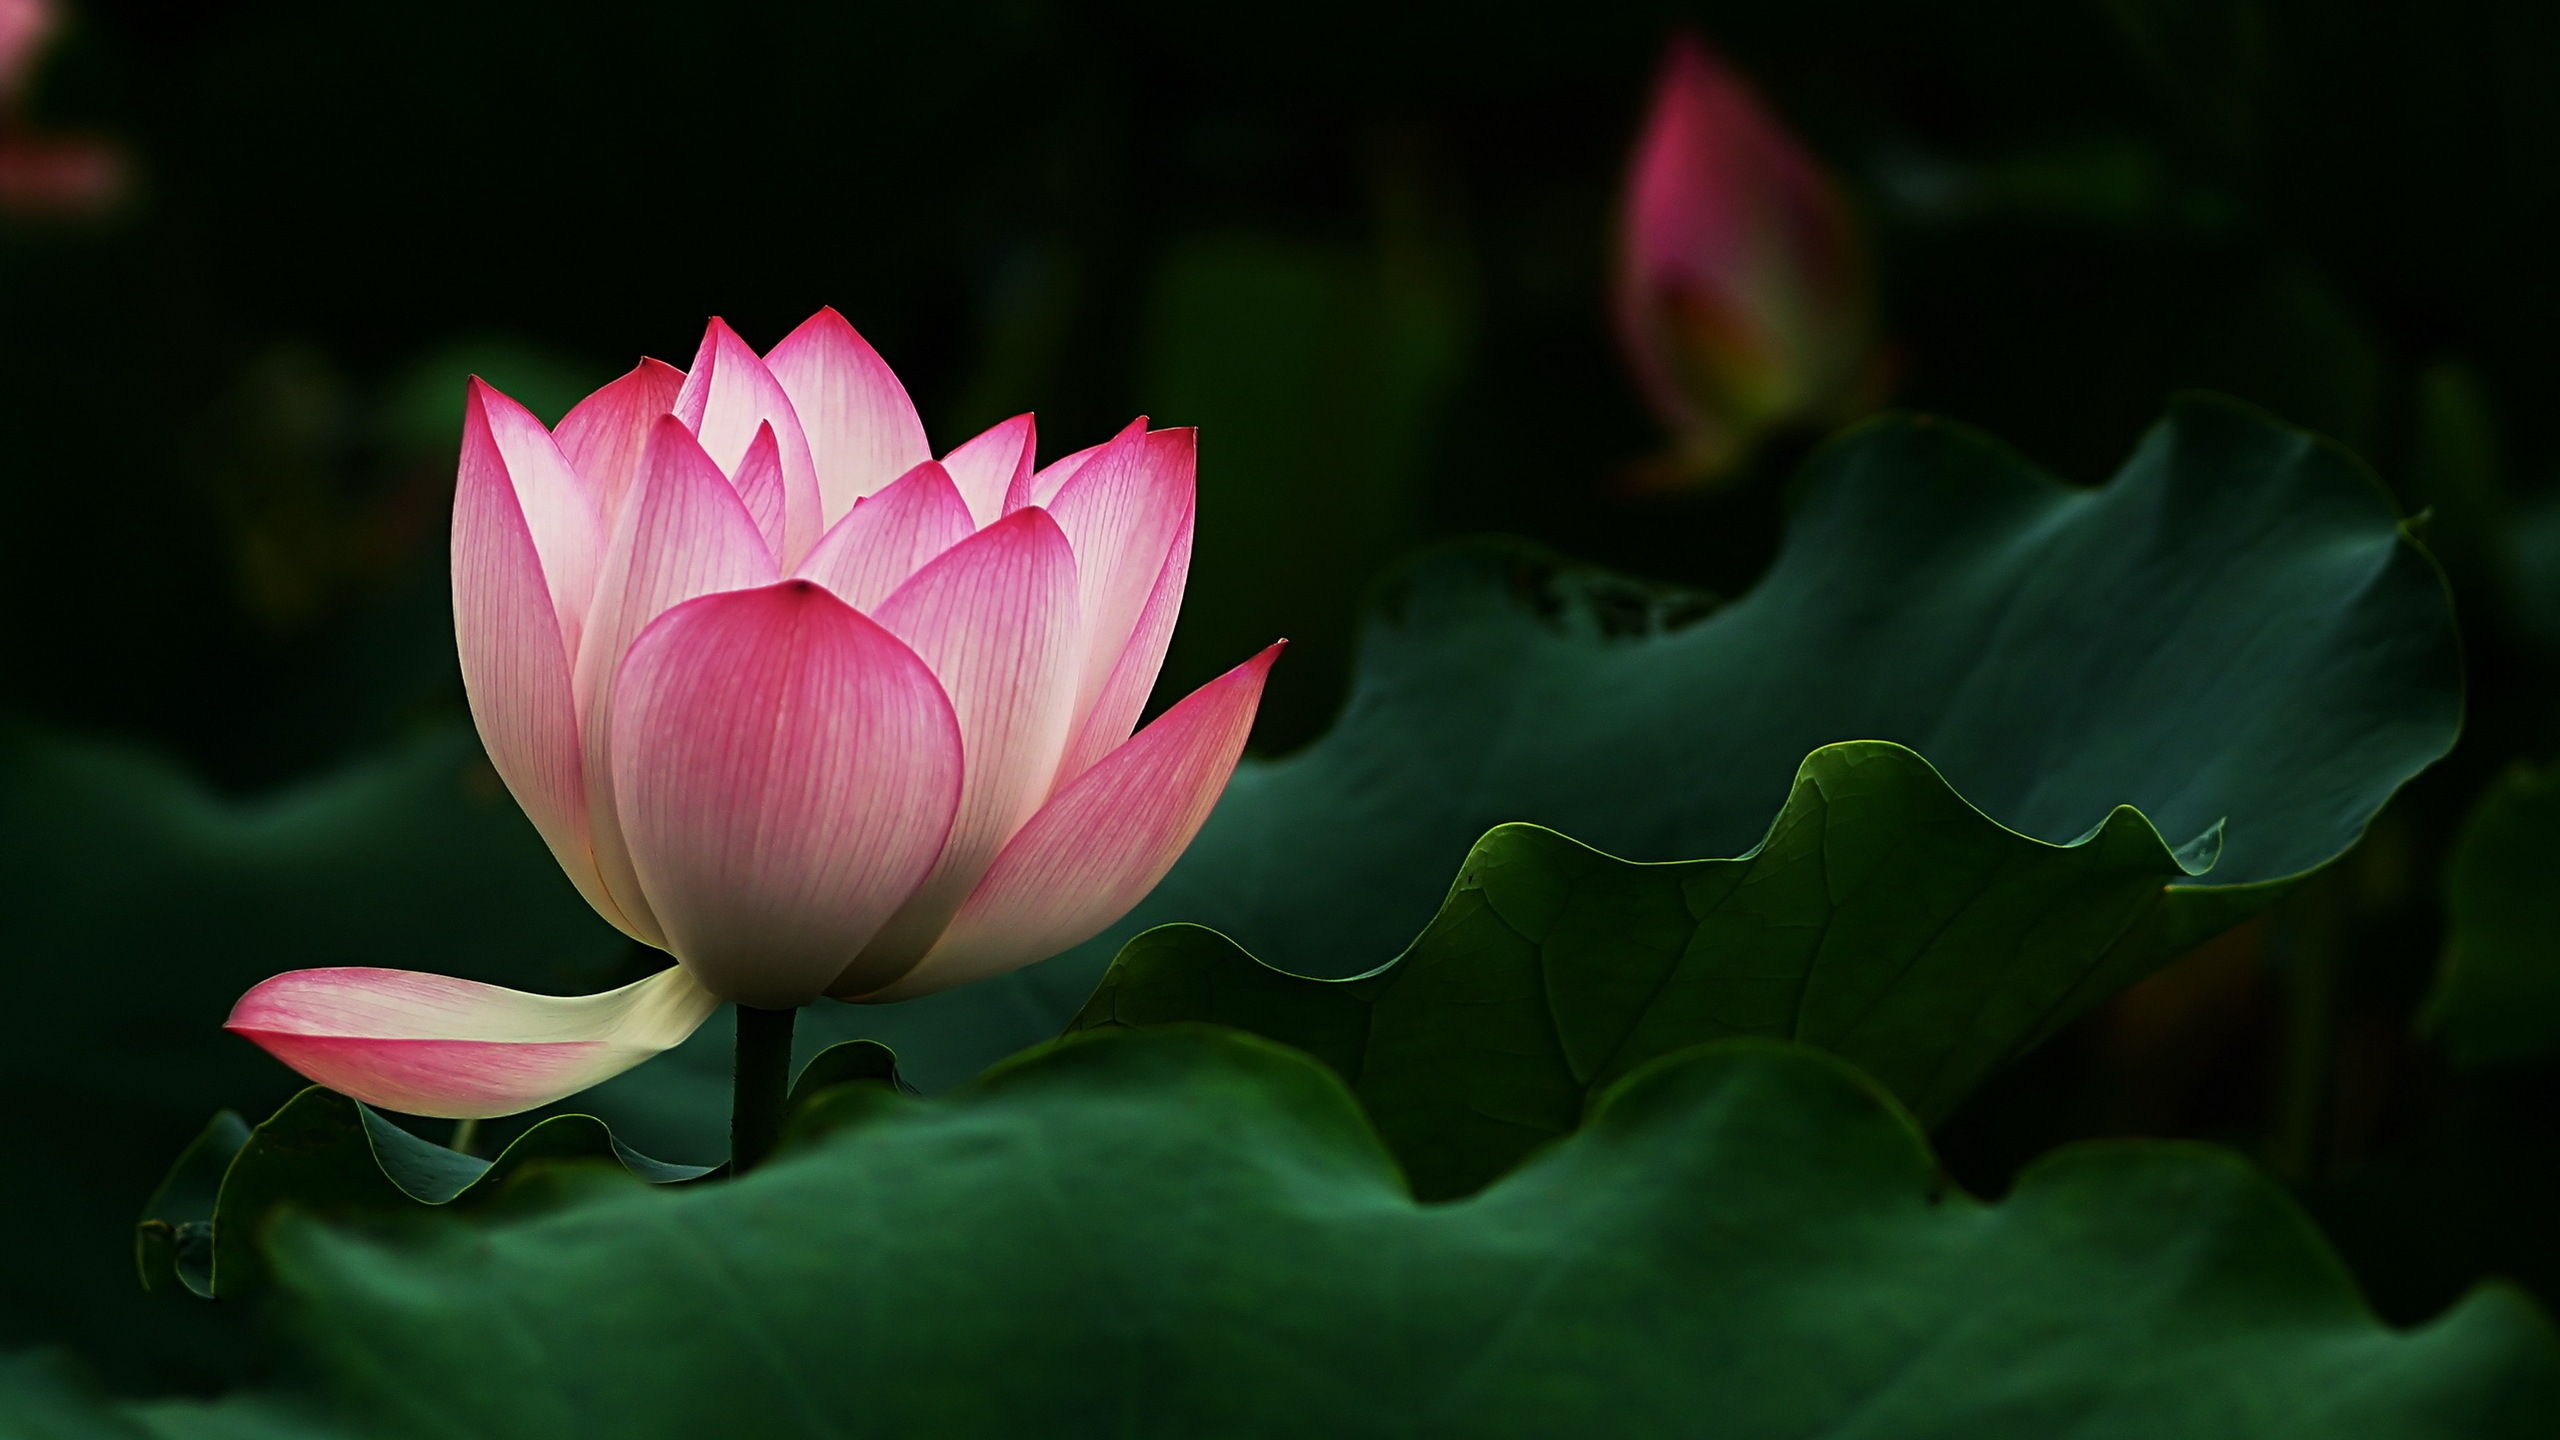 Beautiful Lotus Flower for 2560x1440 HDTV resolution